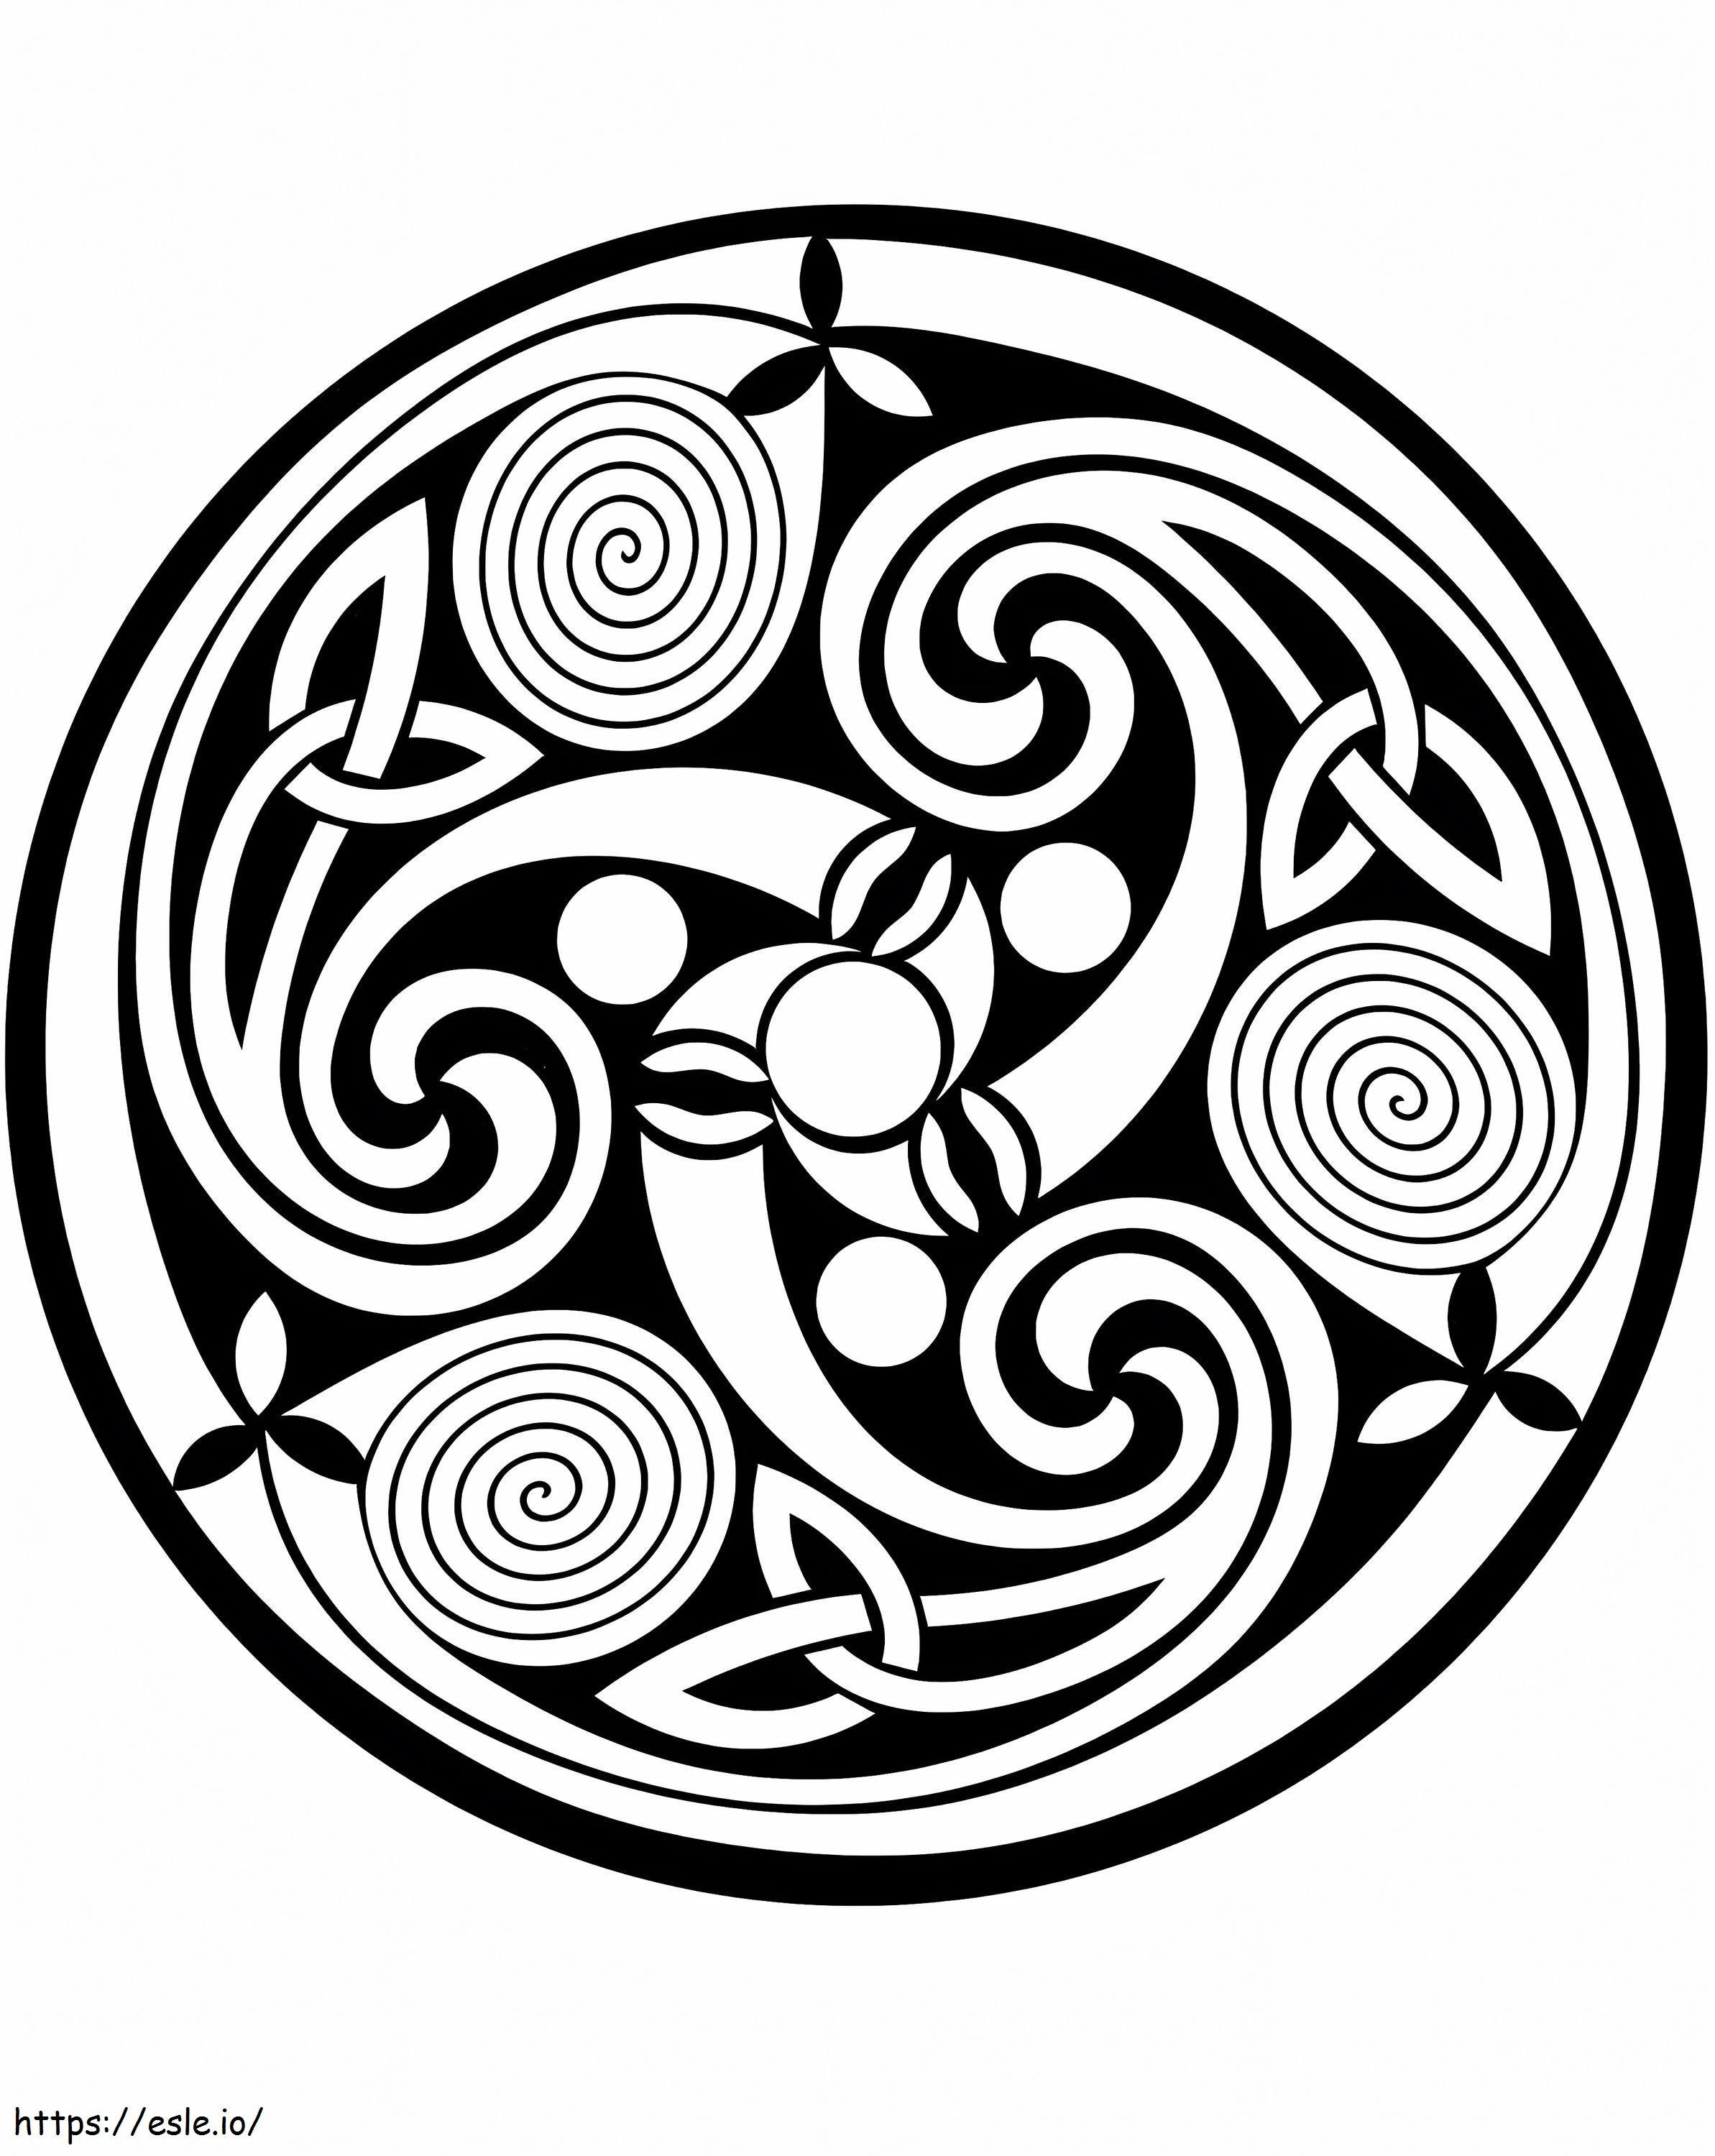 Keltisches Spiralmandala ausmalbilder